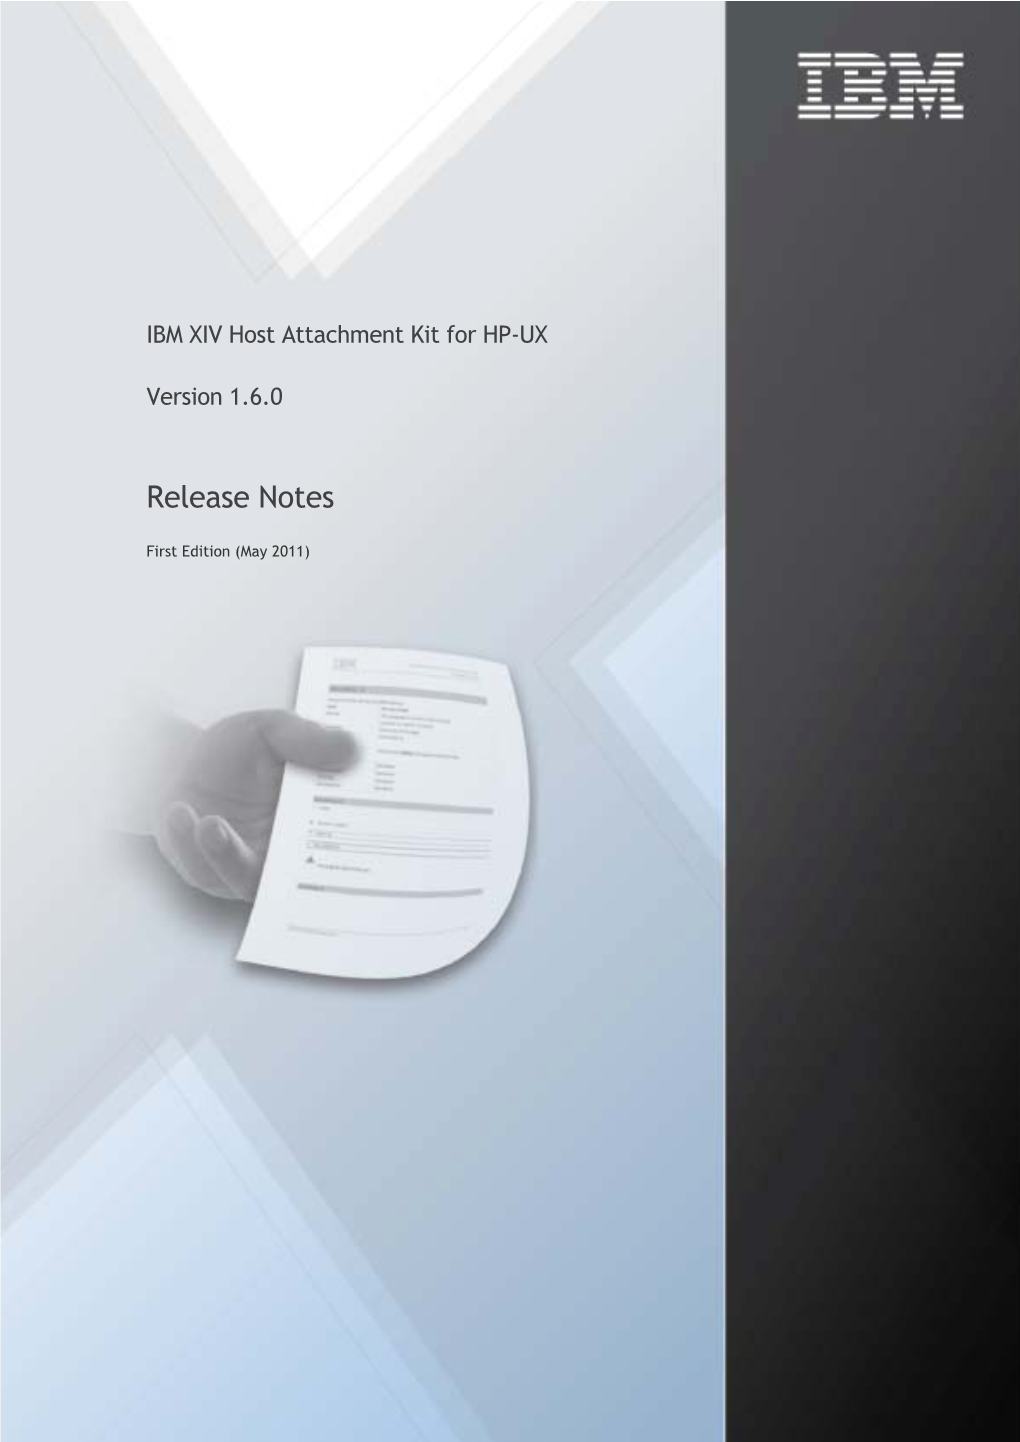 IBM XIV Host Attachment Kit for HP-UX